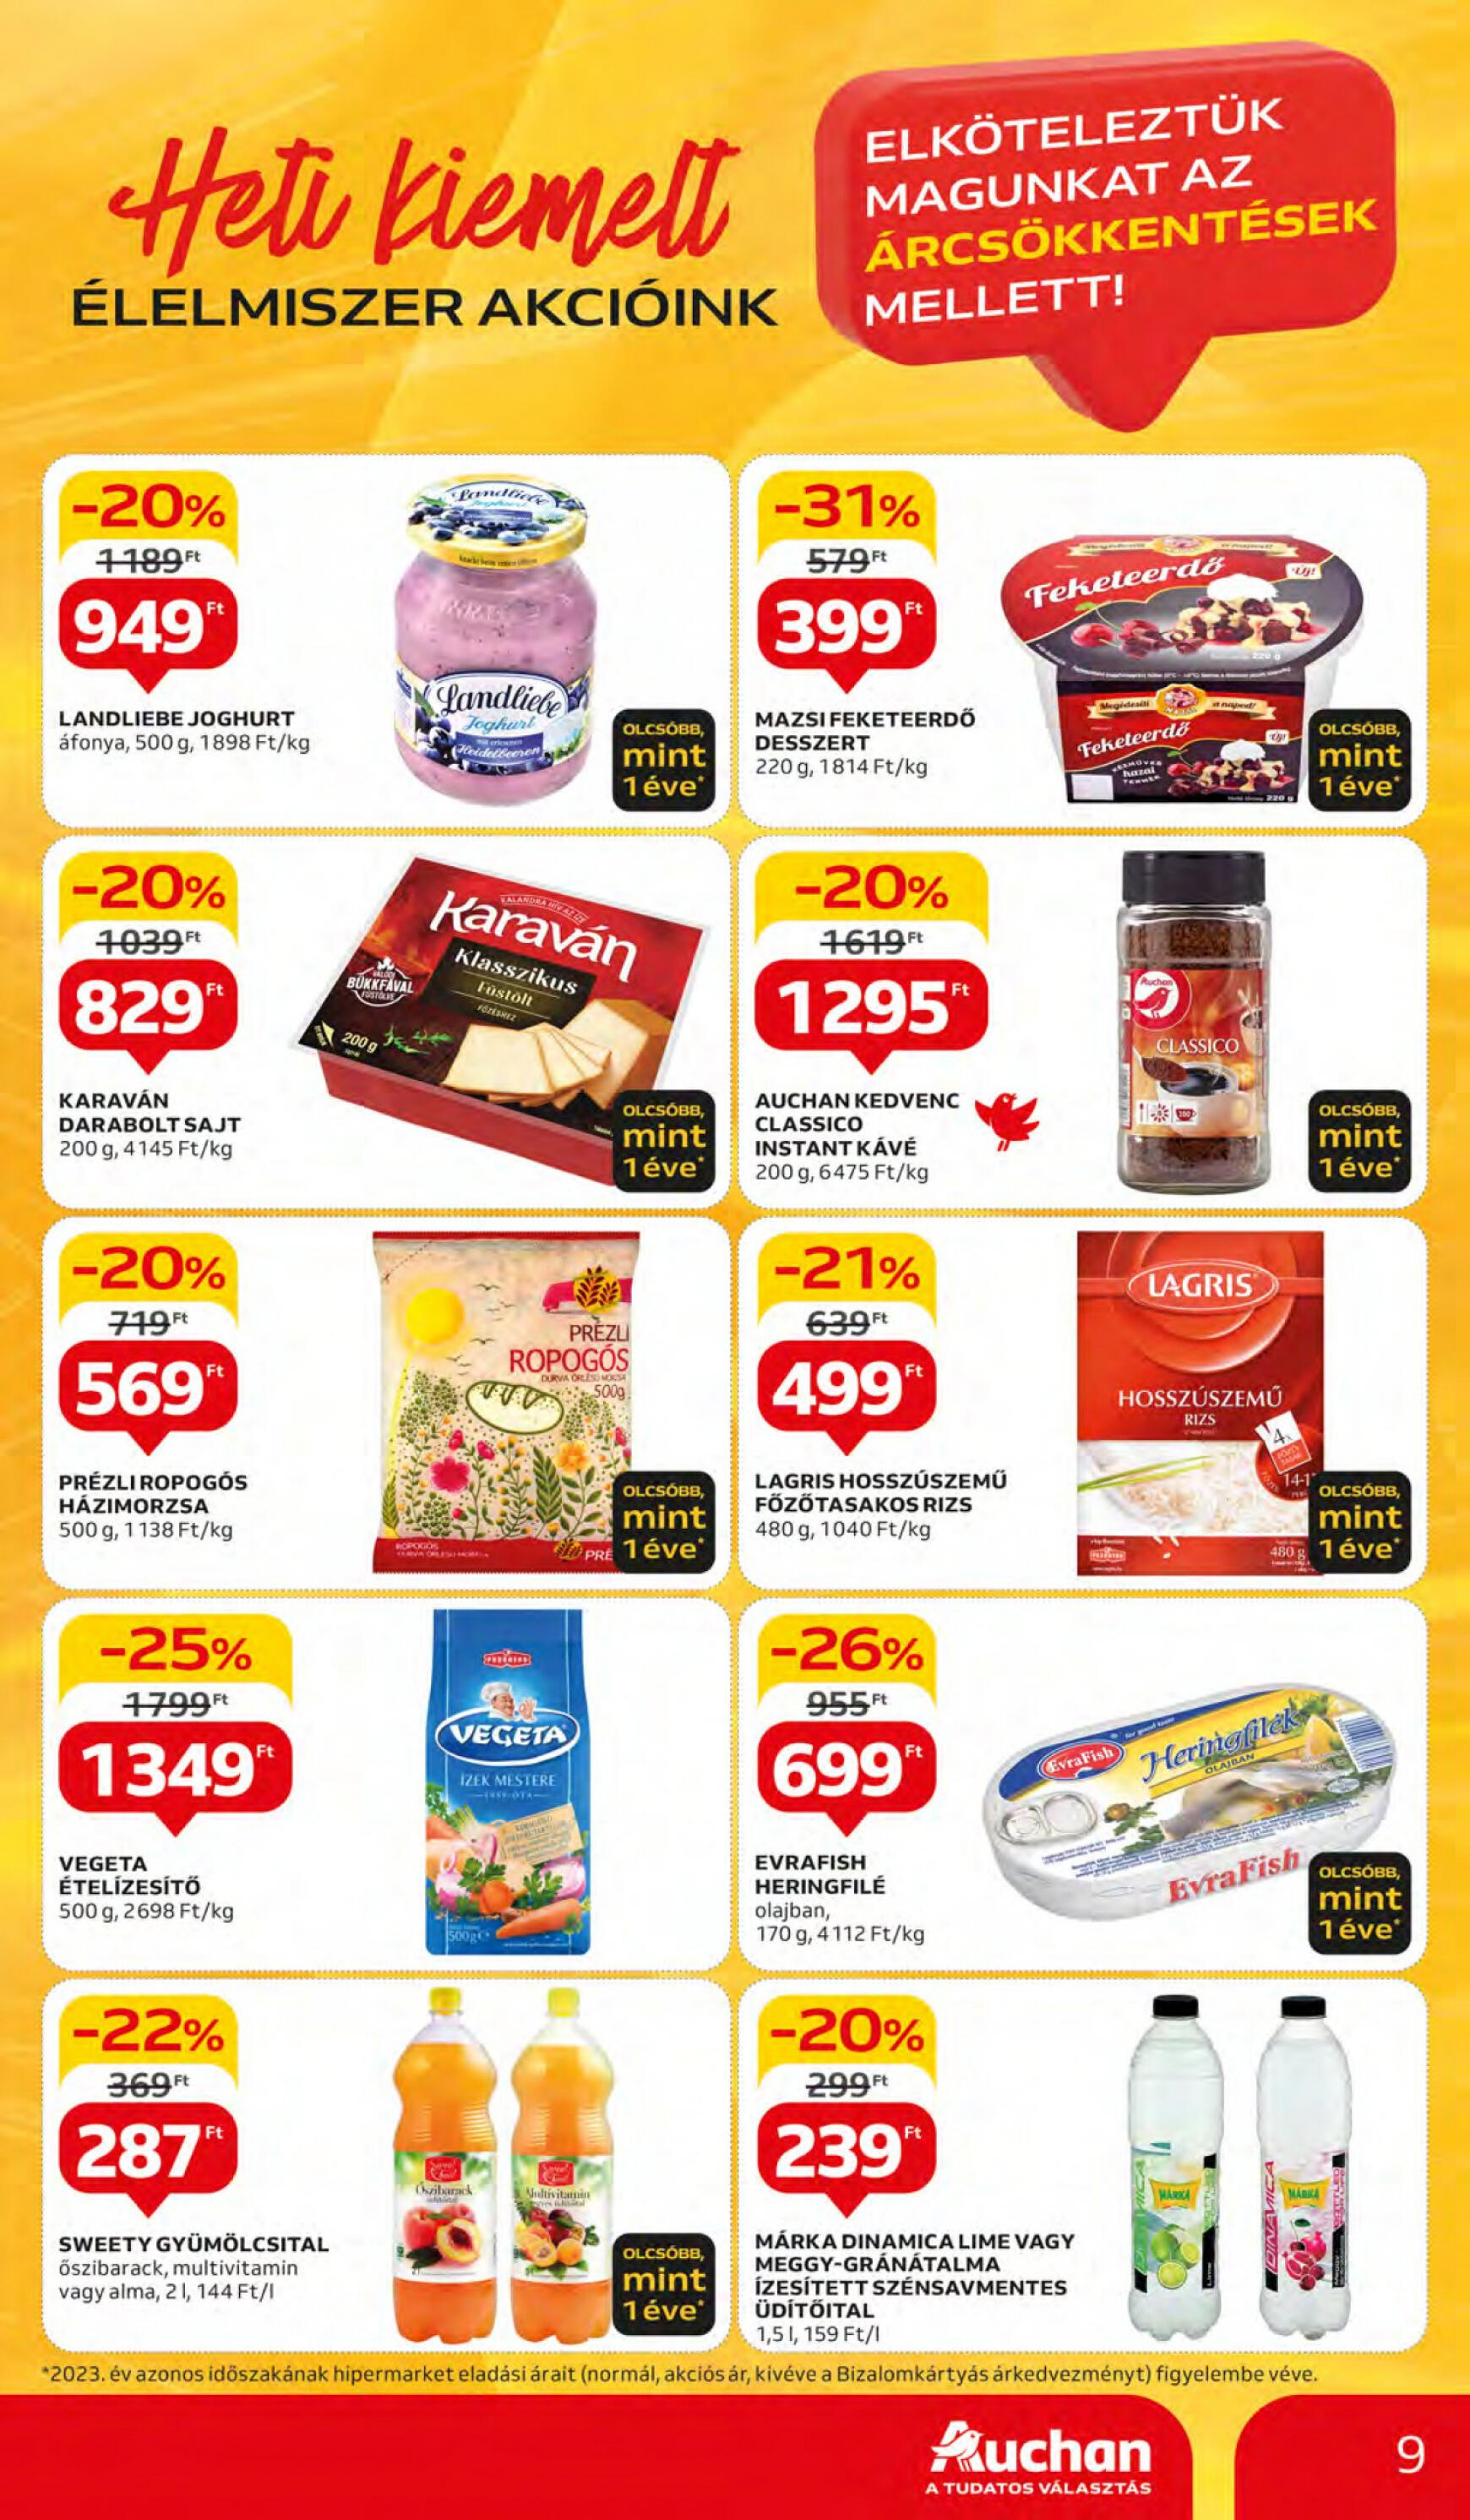 auchan - Aktuális újság Auchan 04.11. - 04.17. - page: 9